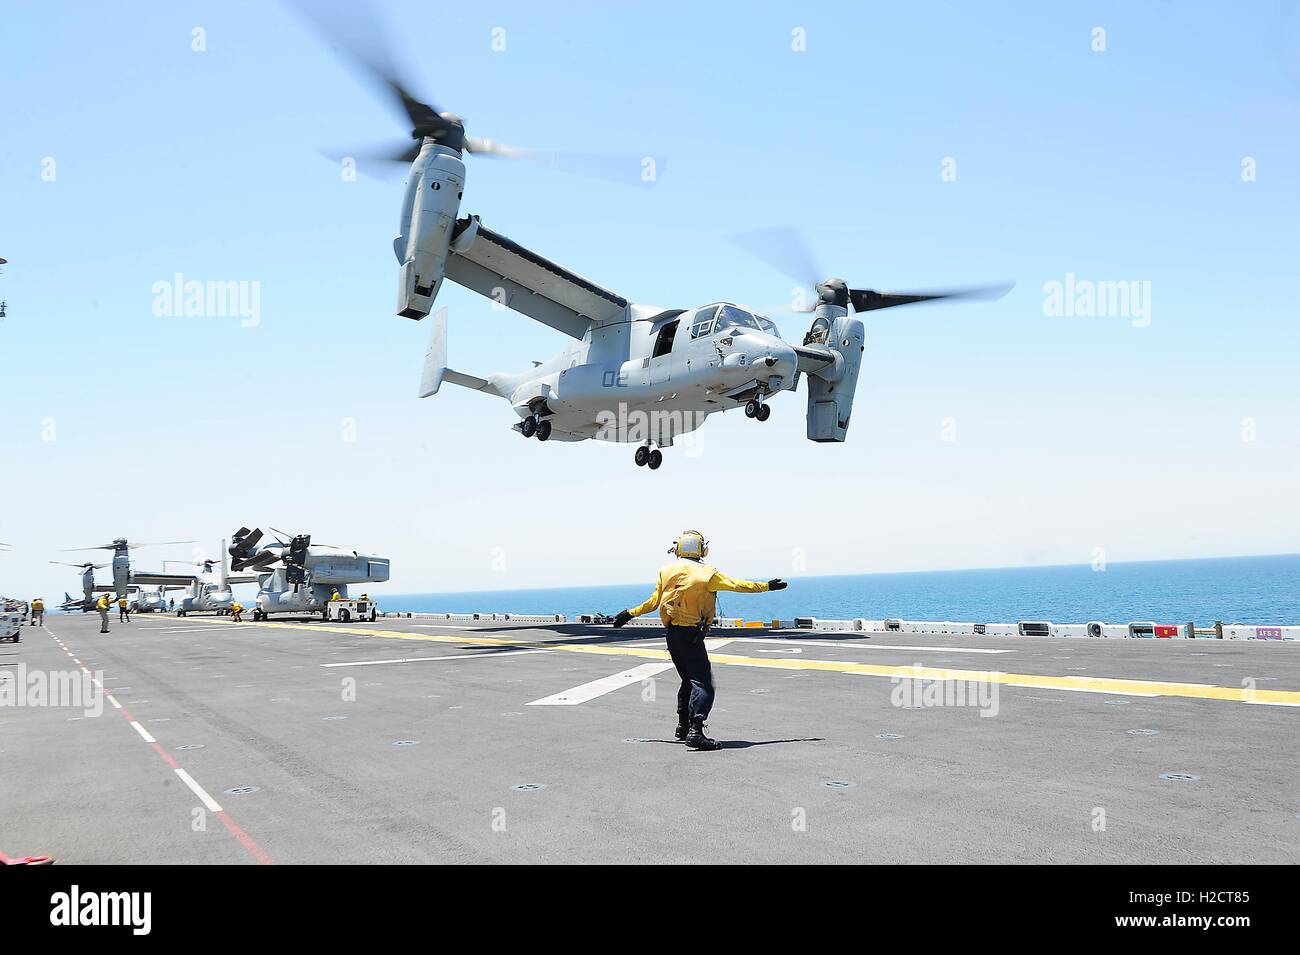 A U.S. Navy aviation boatswains mate signals a U.S. Marine MV-22 Osprey assault support aircraft on the flight deck of the USN Wasp-class amphibious assault ship USS Boxer July 11, 2016 in the Arabian Gulf. Stock Photo